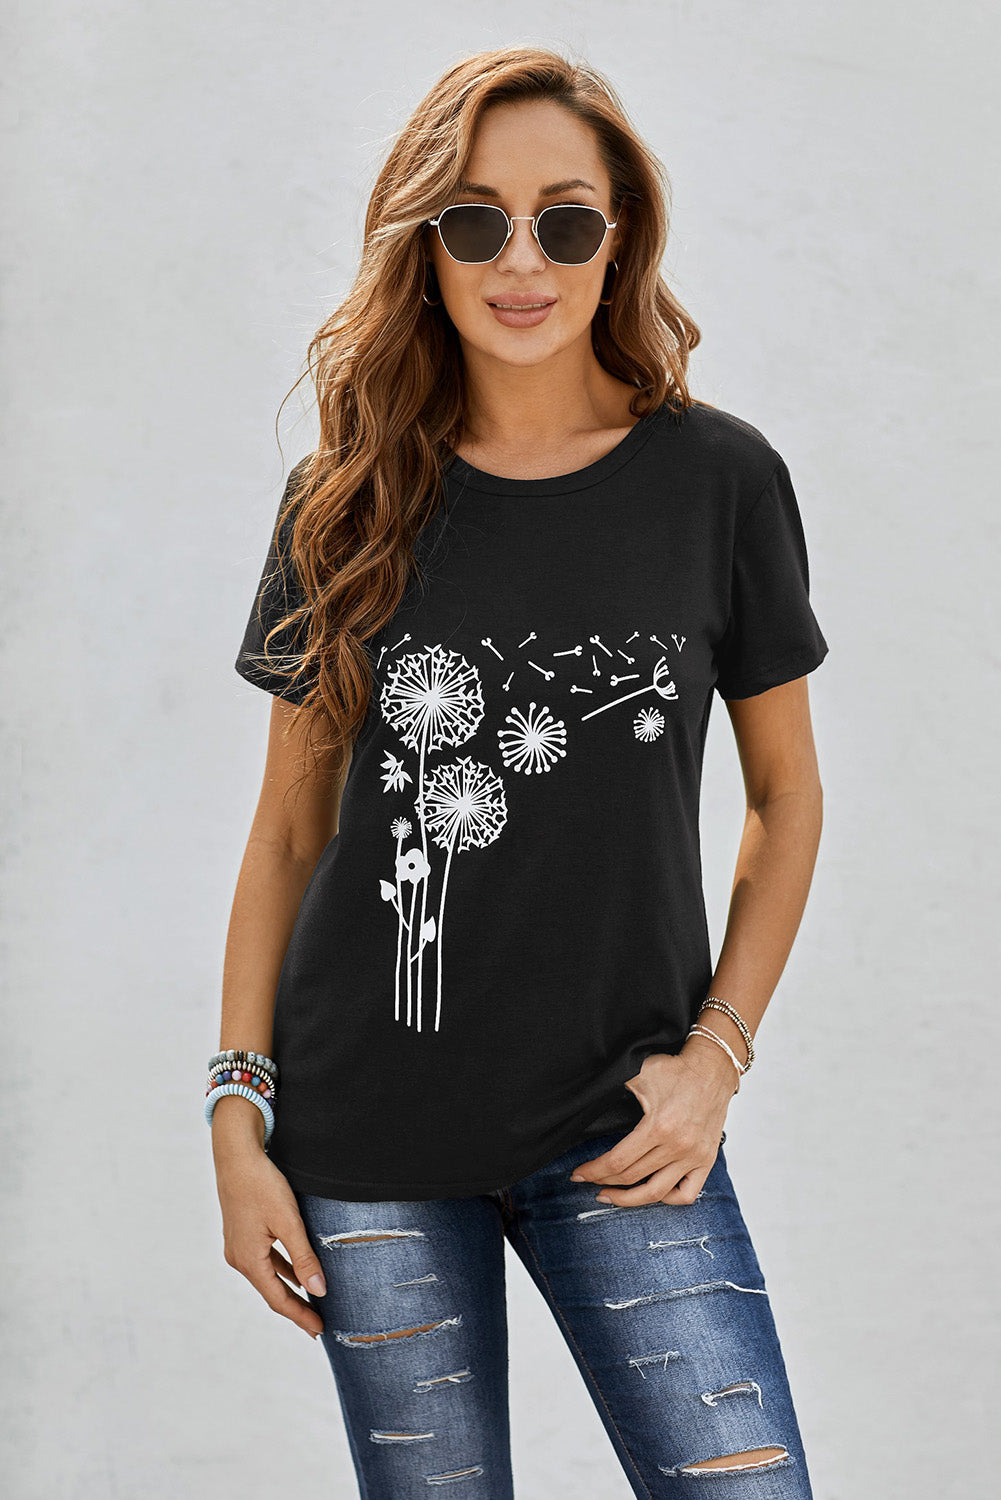 Women's Black Crew Neck Dandelion Print Short Sleeve T-shirt